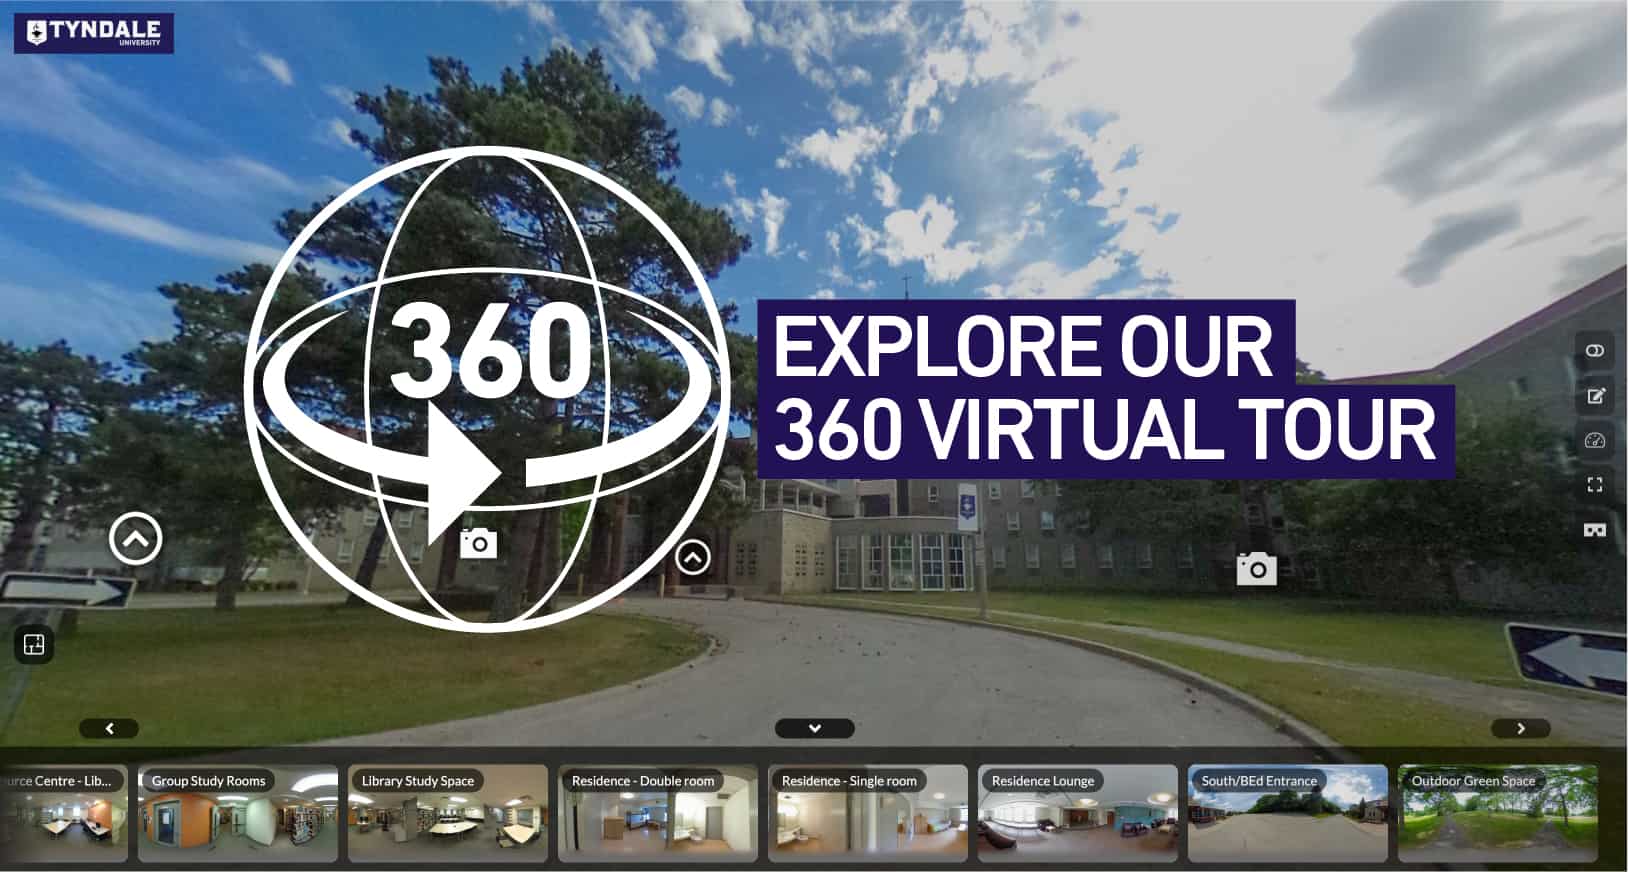 Explore our 360 virtual tour